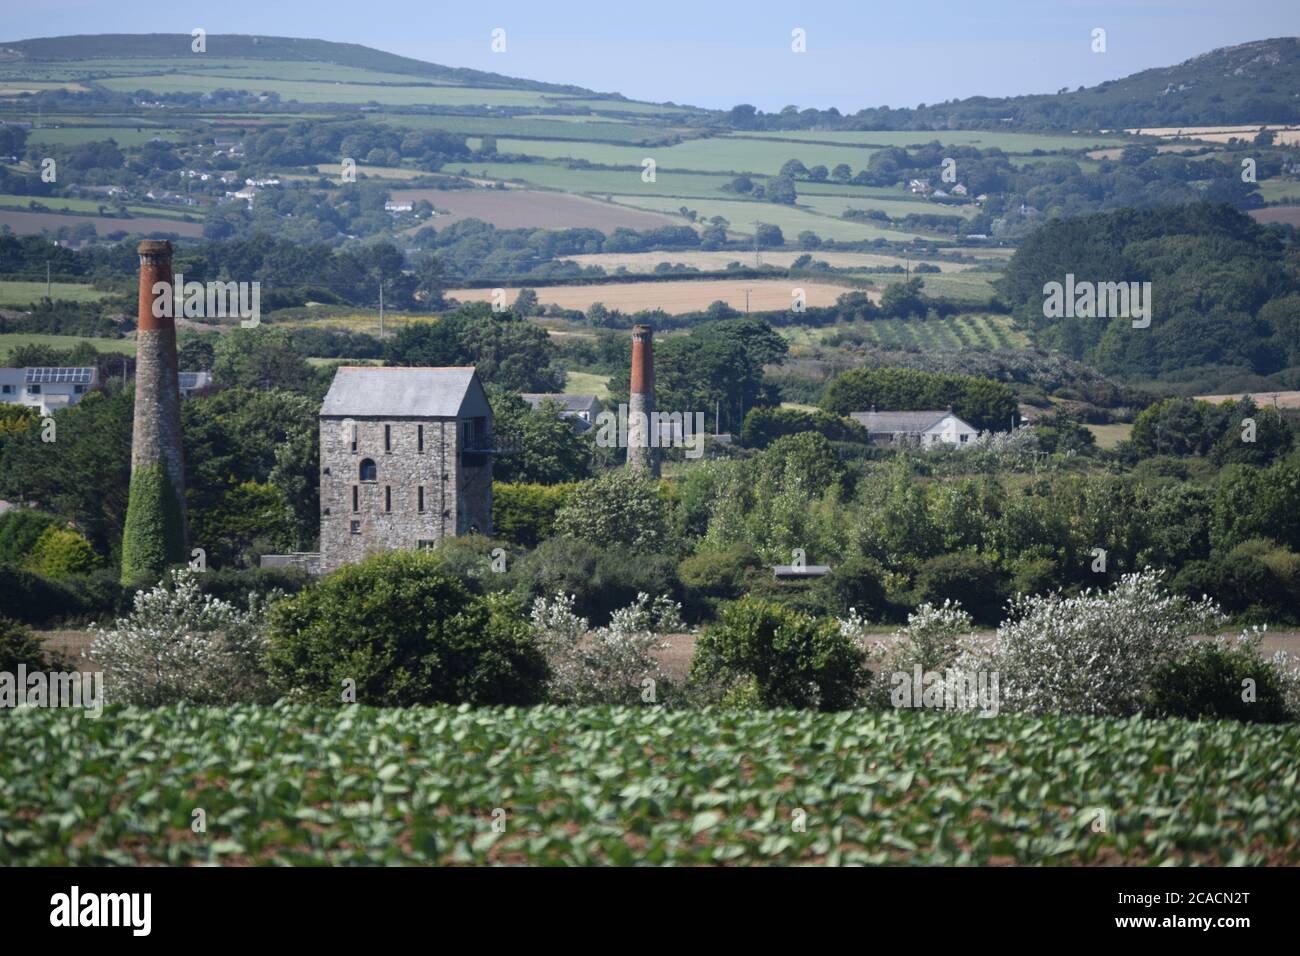 tin mine chimneys in landscape Stock Photo